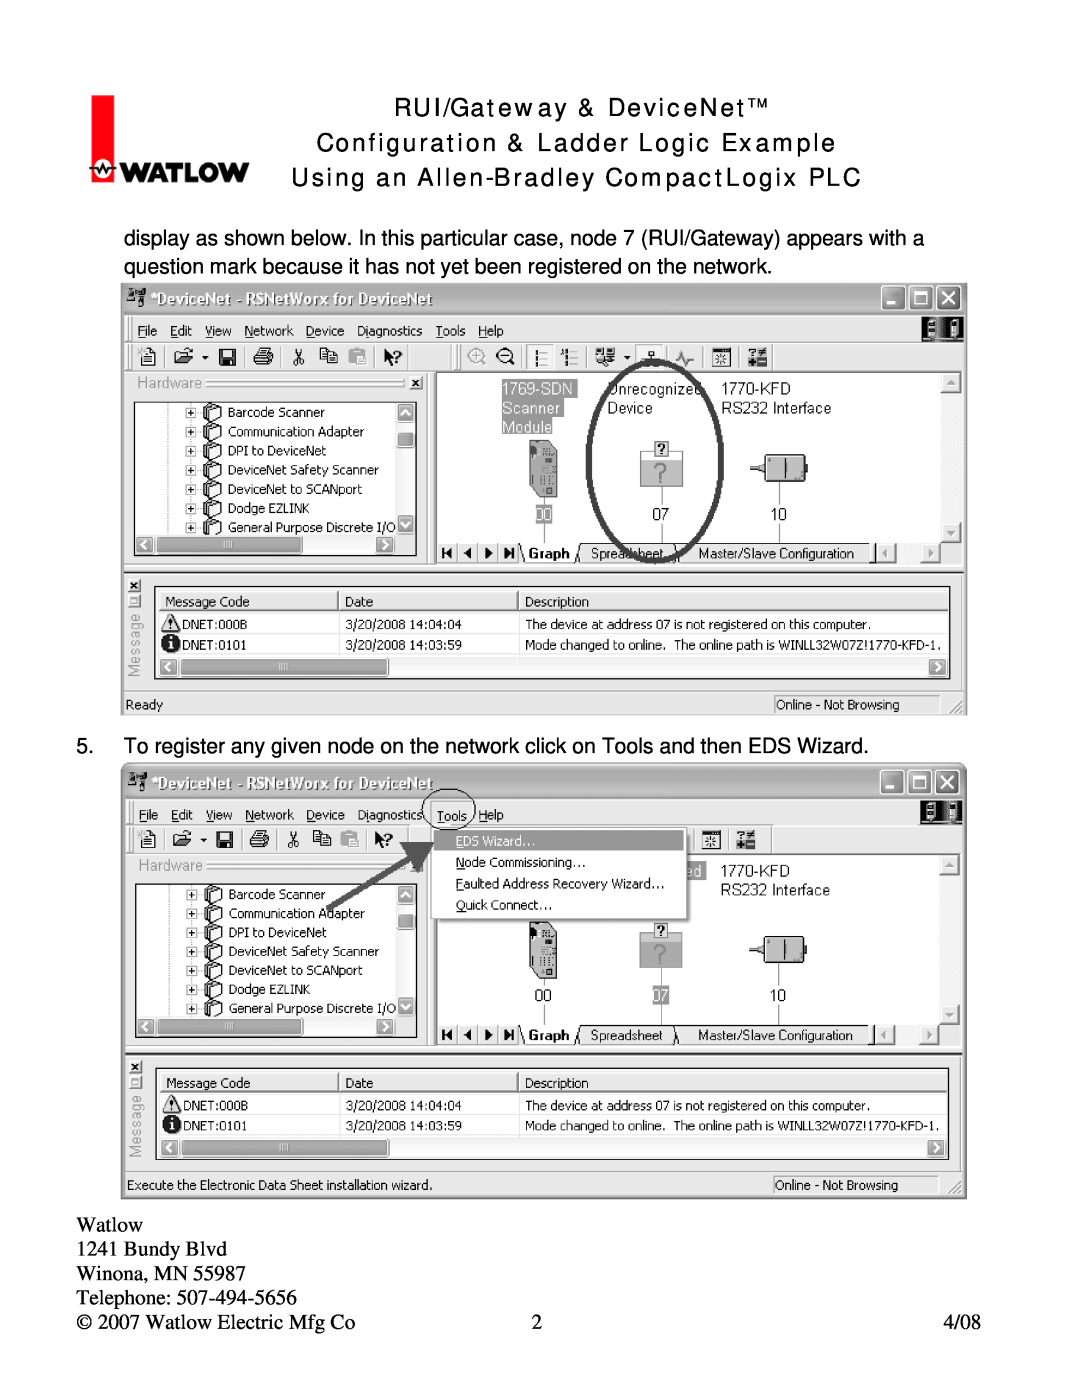 Watlow Electric RUI/Gateway & DeviceNetTM Configuration & Ladder Logic Example, Using an Allen-Bradley CompactLogix PLC 